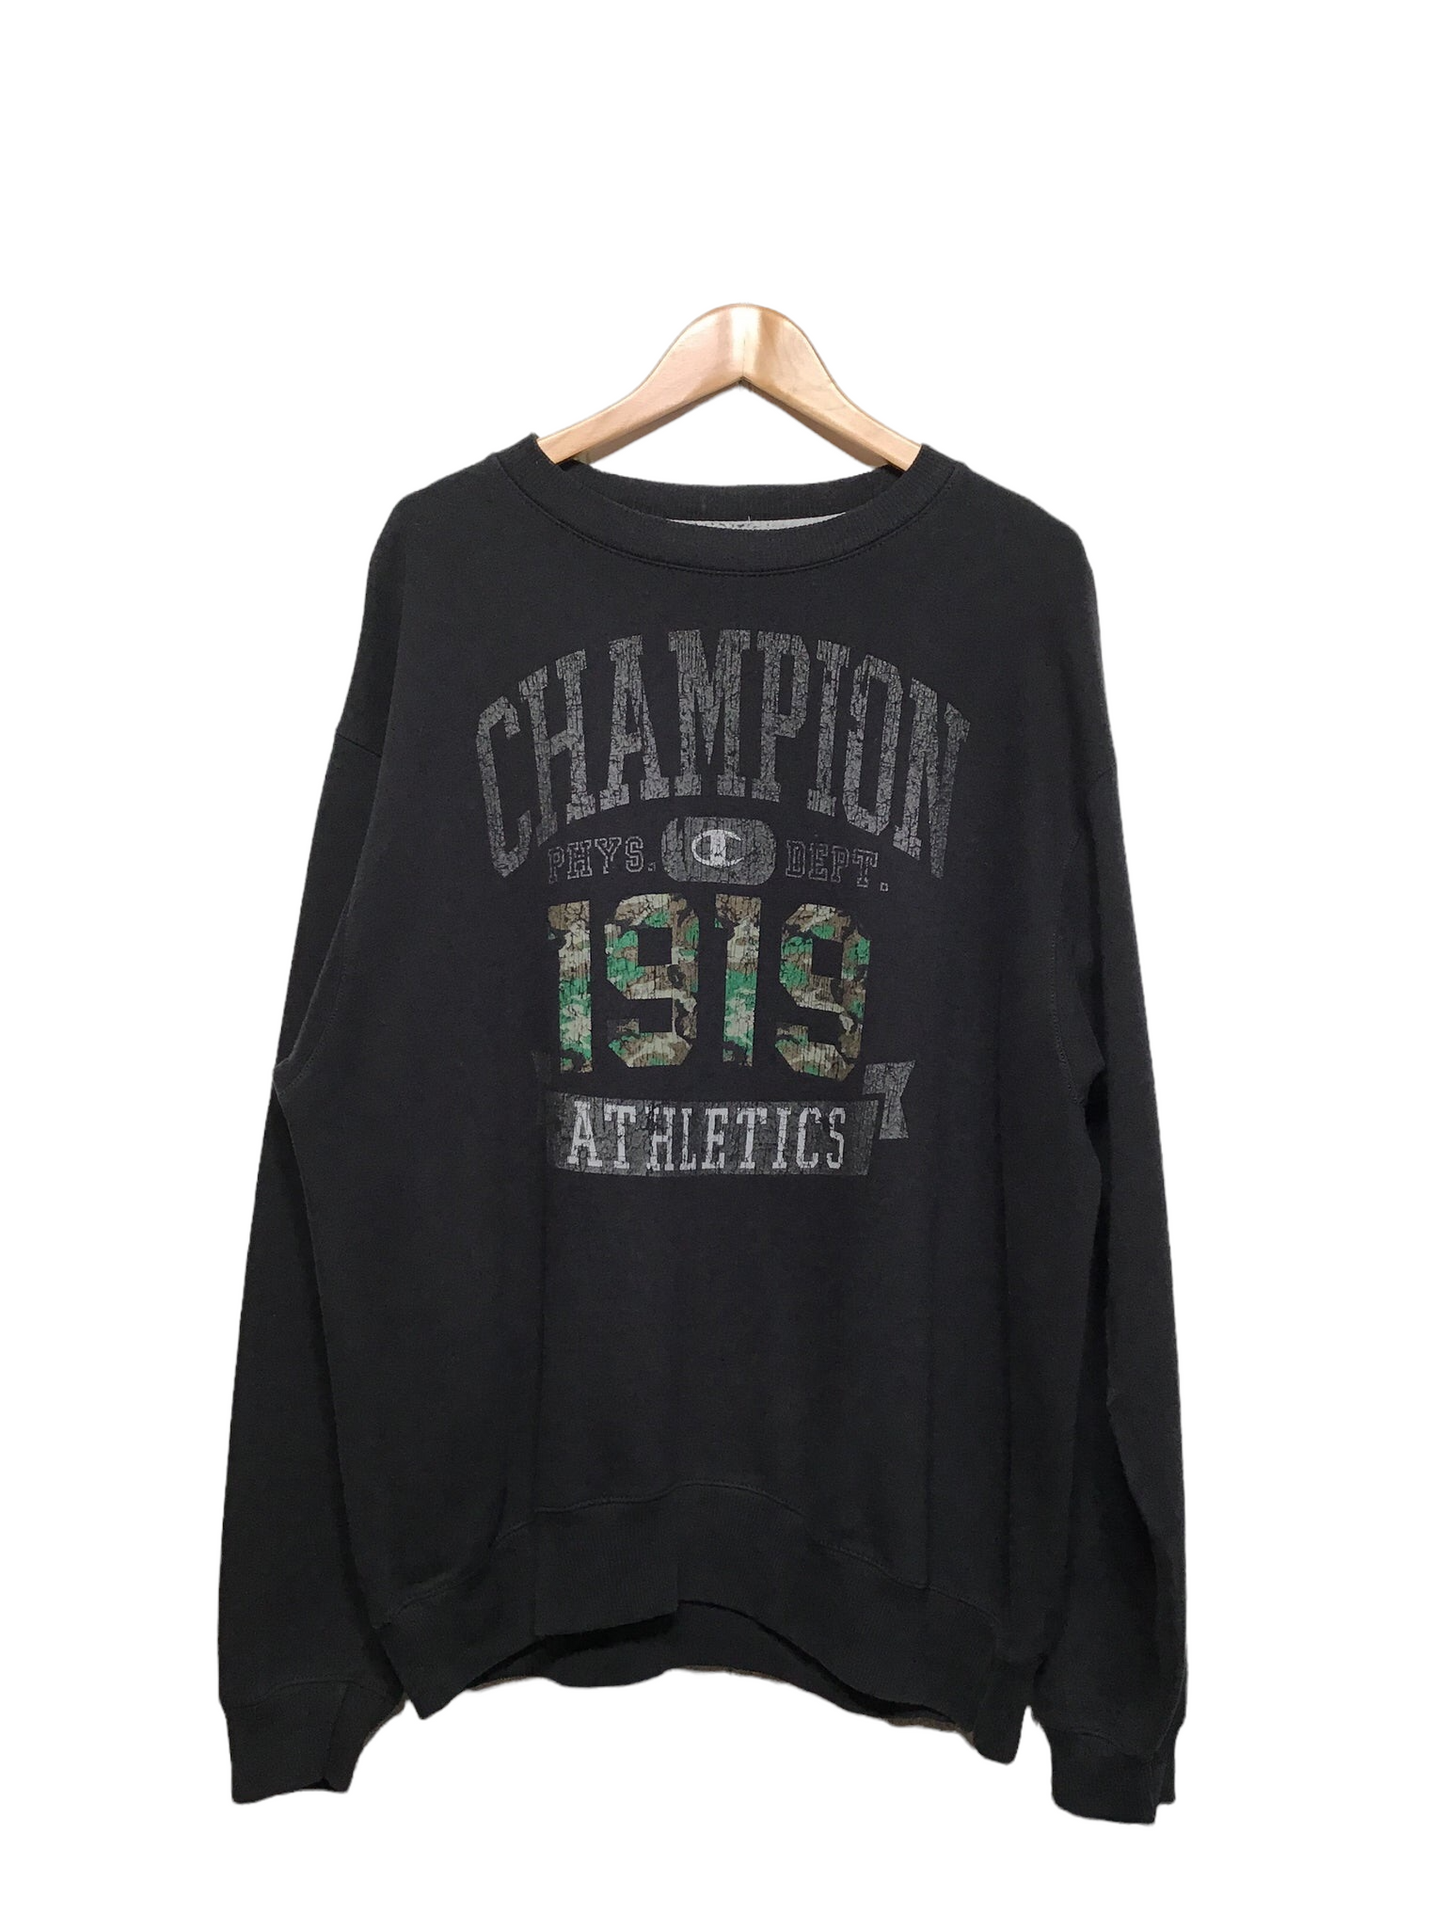 Champion Sweatshirt (Size L)